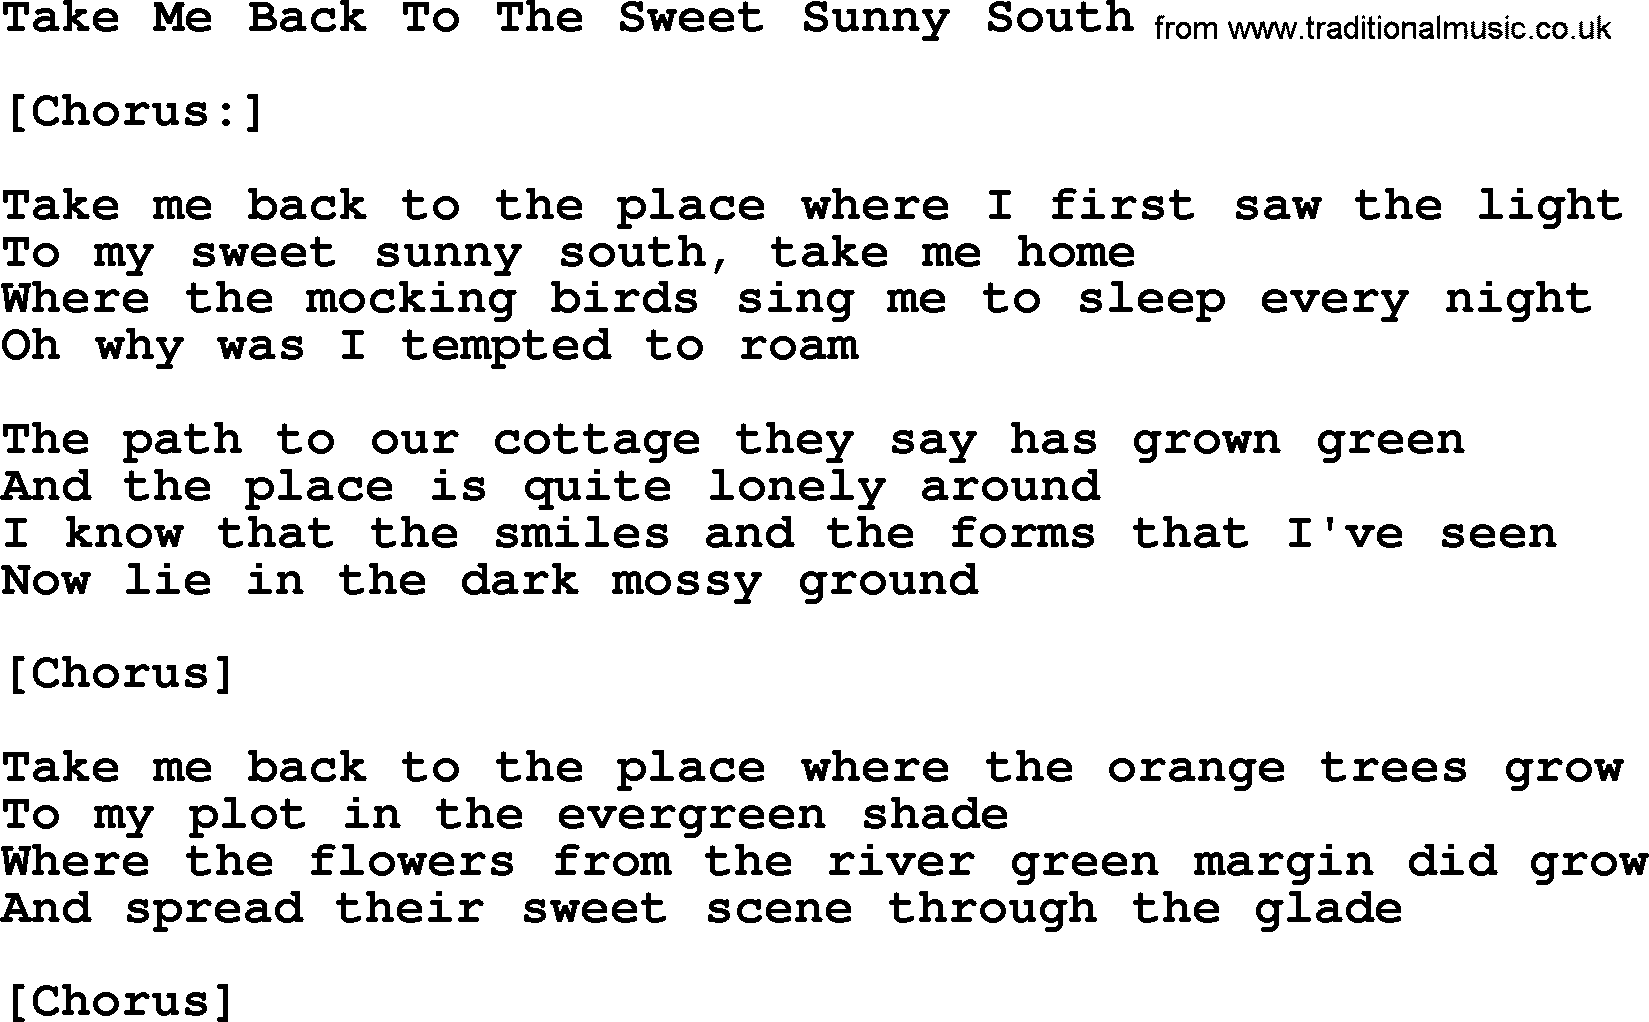 Joan Baez song Take Me Back To The Sweet Sunny South, lyrics